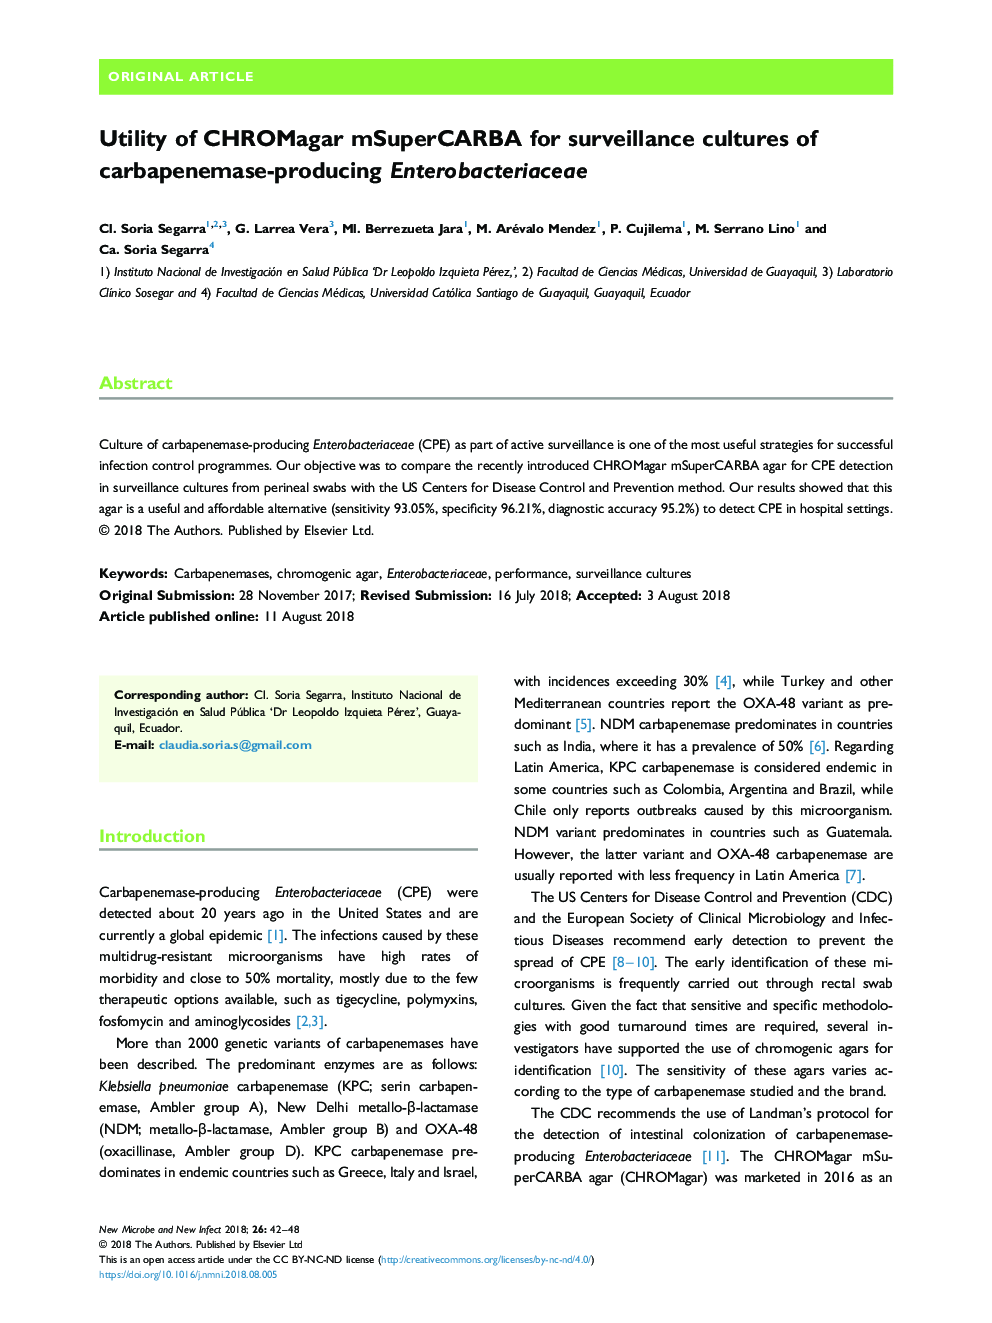 Utility of CHROMagar mSuperCARBA for surveillance cultures of carbapenemase-producing Enterobacteriaceae